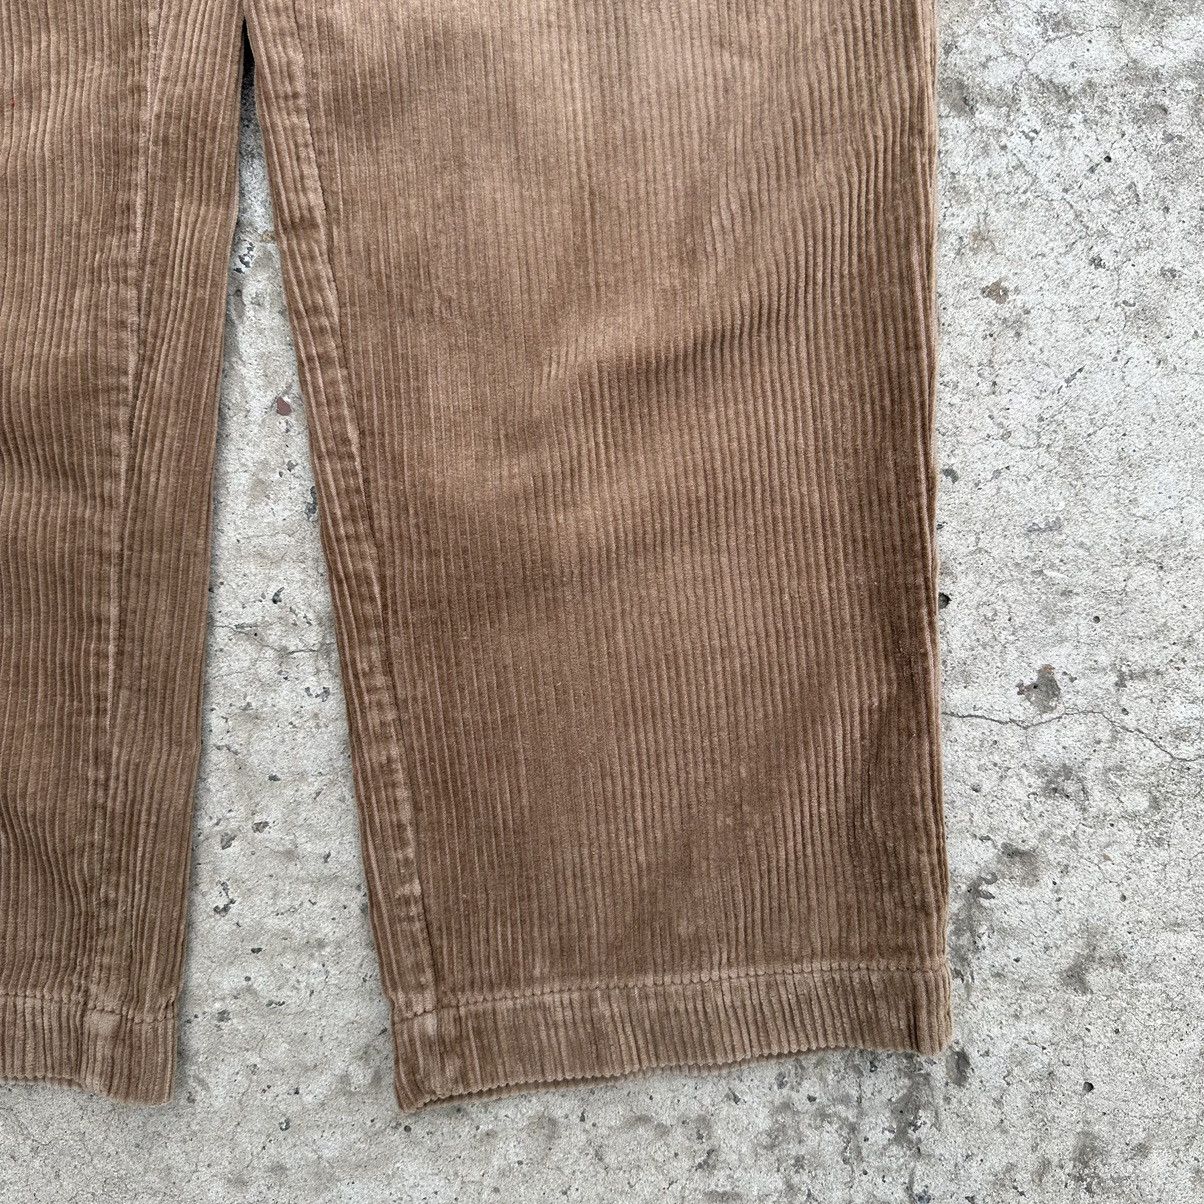 Vintage Vintage Corduroy Pants Marlboro Classic velveteen 90s Size US 32 / EU 48 - 10 Thumbnail